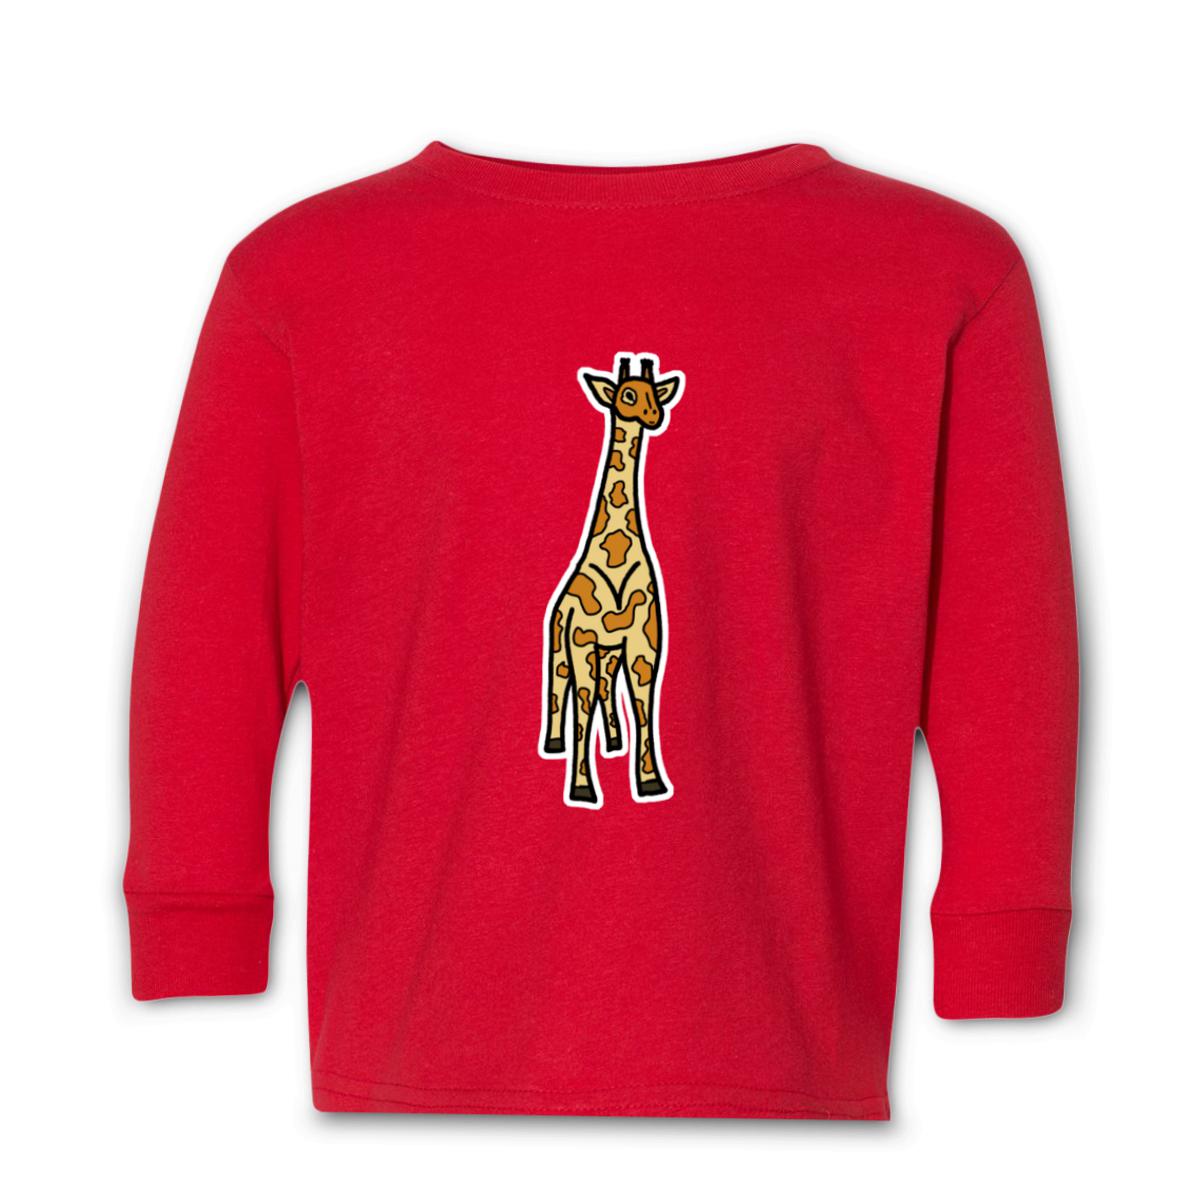 Toy Giraffe Toddler Long Sleeve Tee 56T red